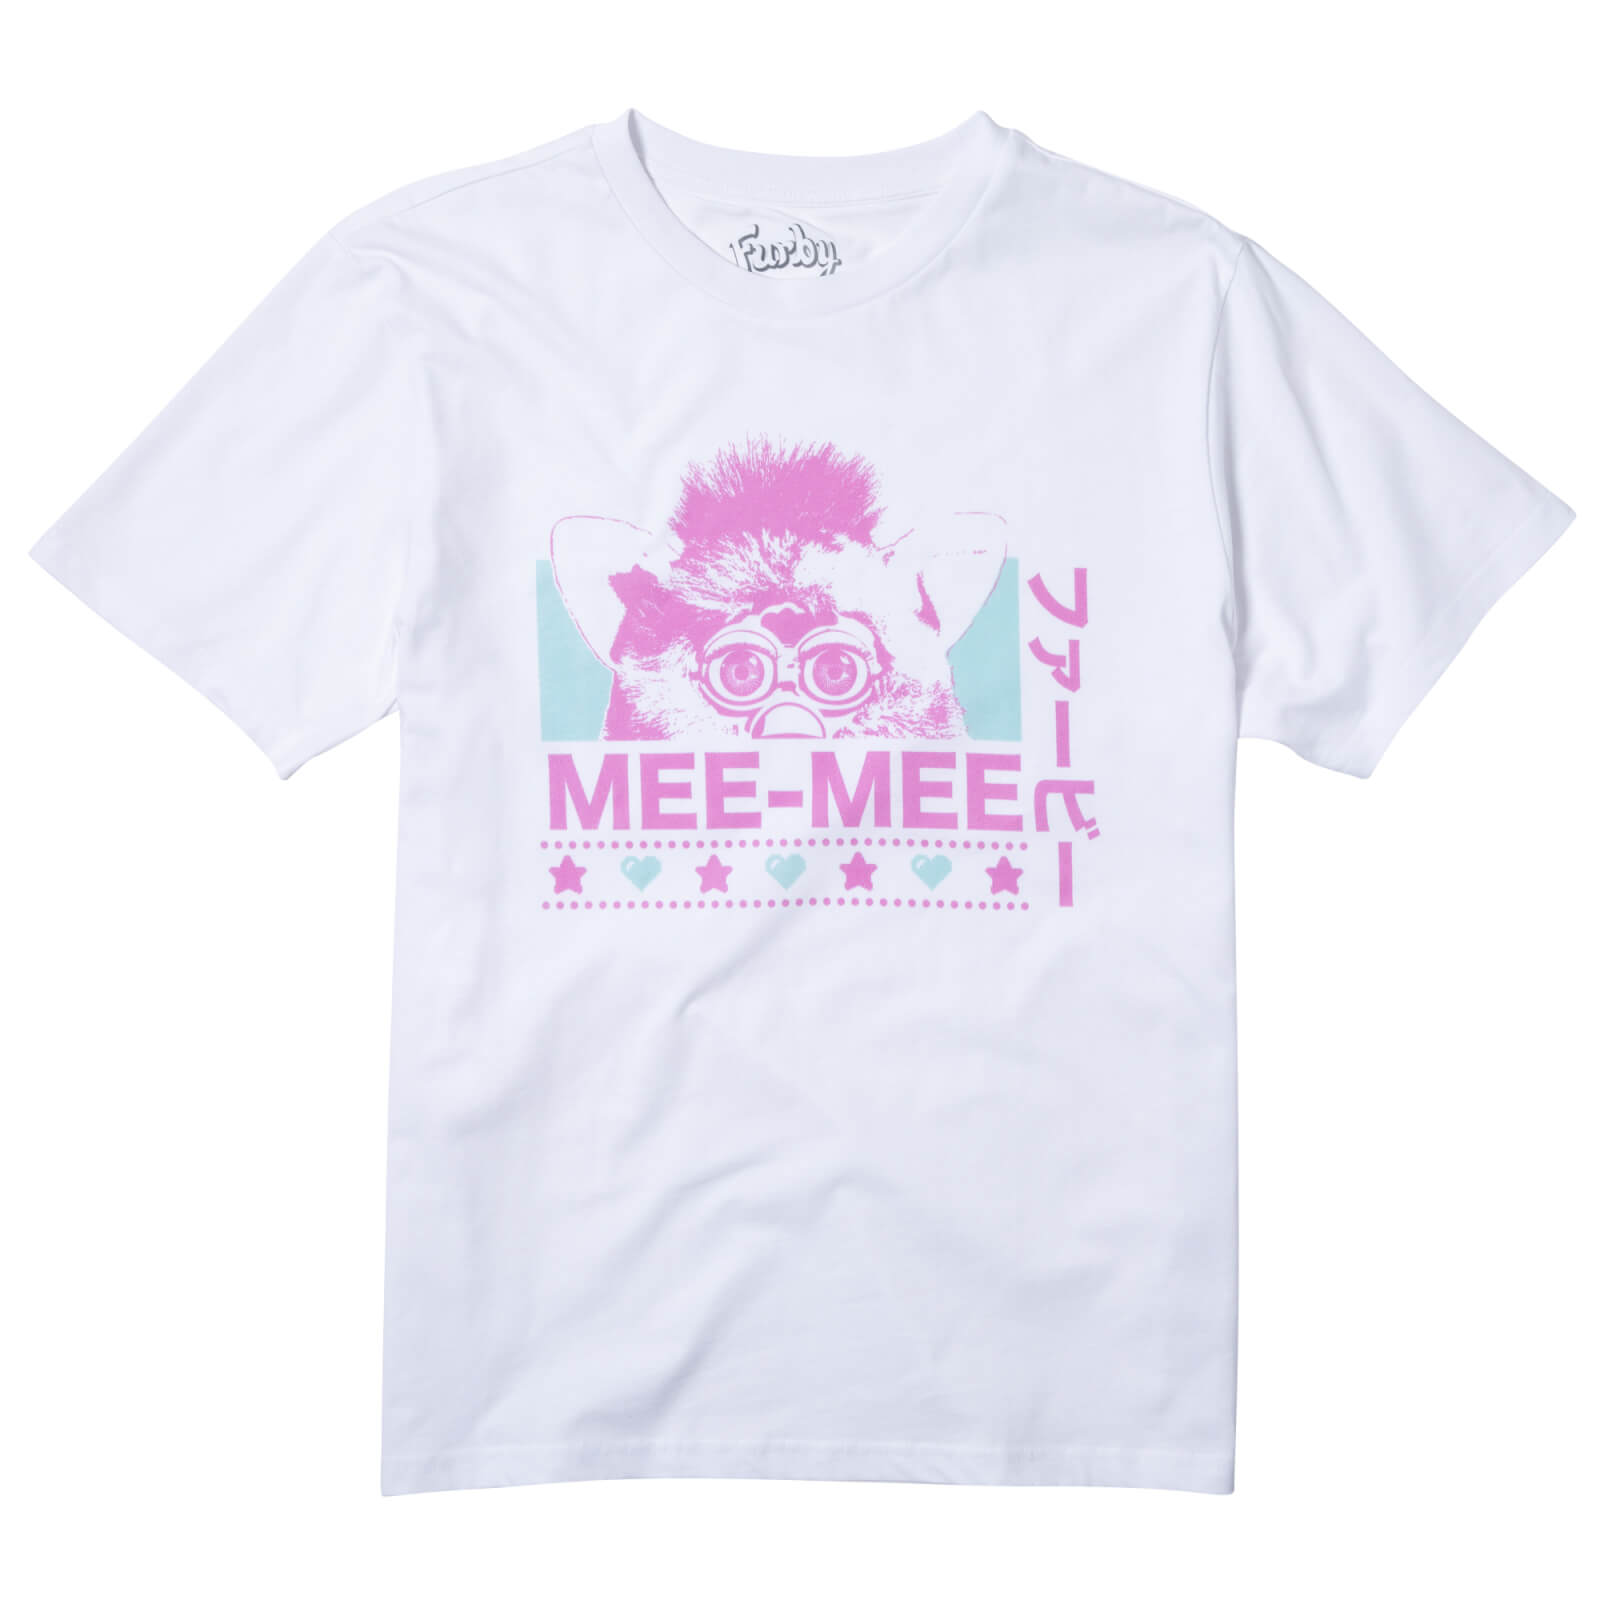 Furby Mee Mee Unisex T-Shirt - White - XS